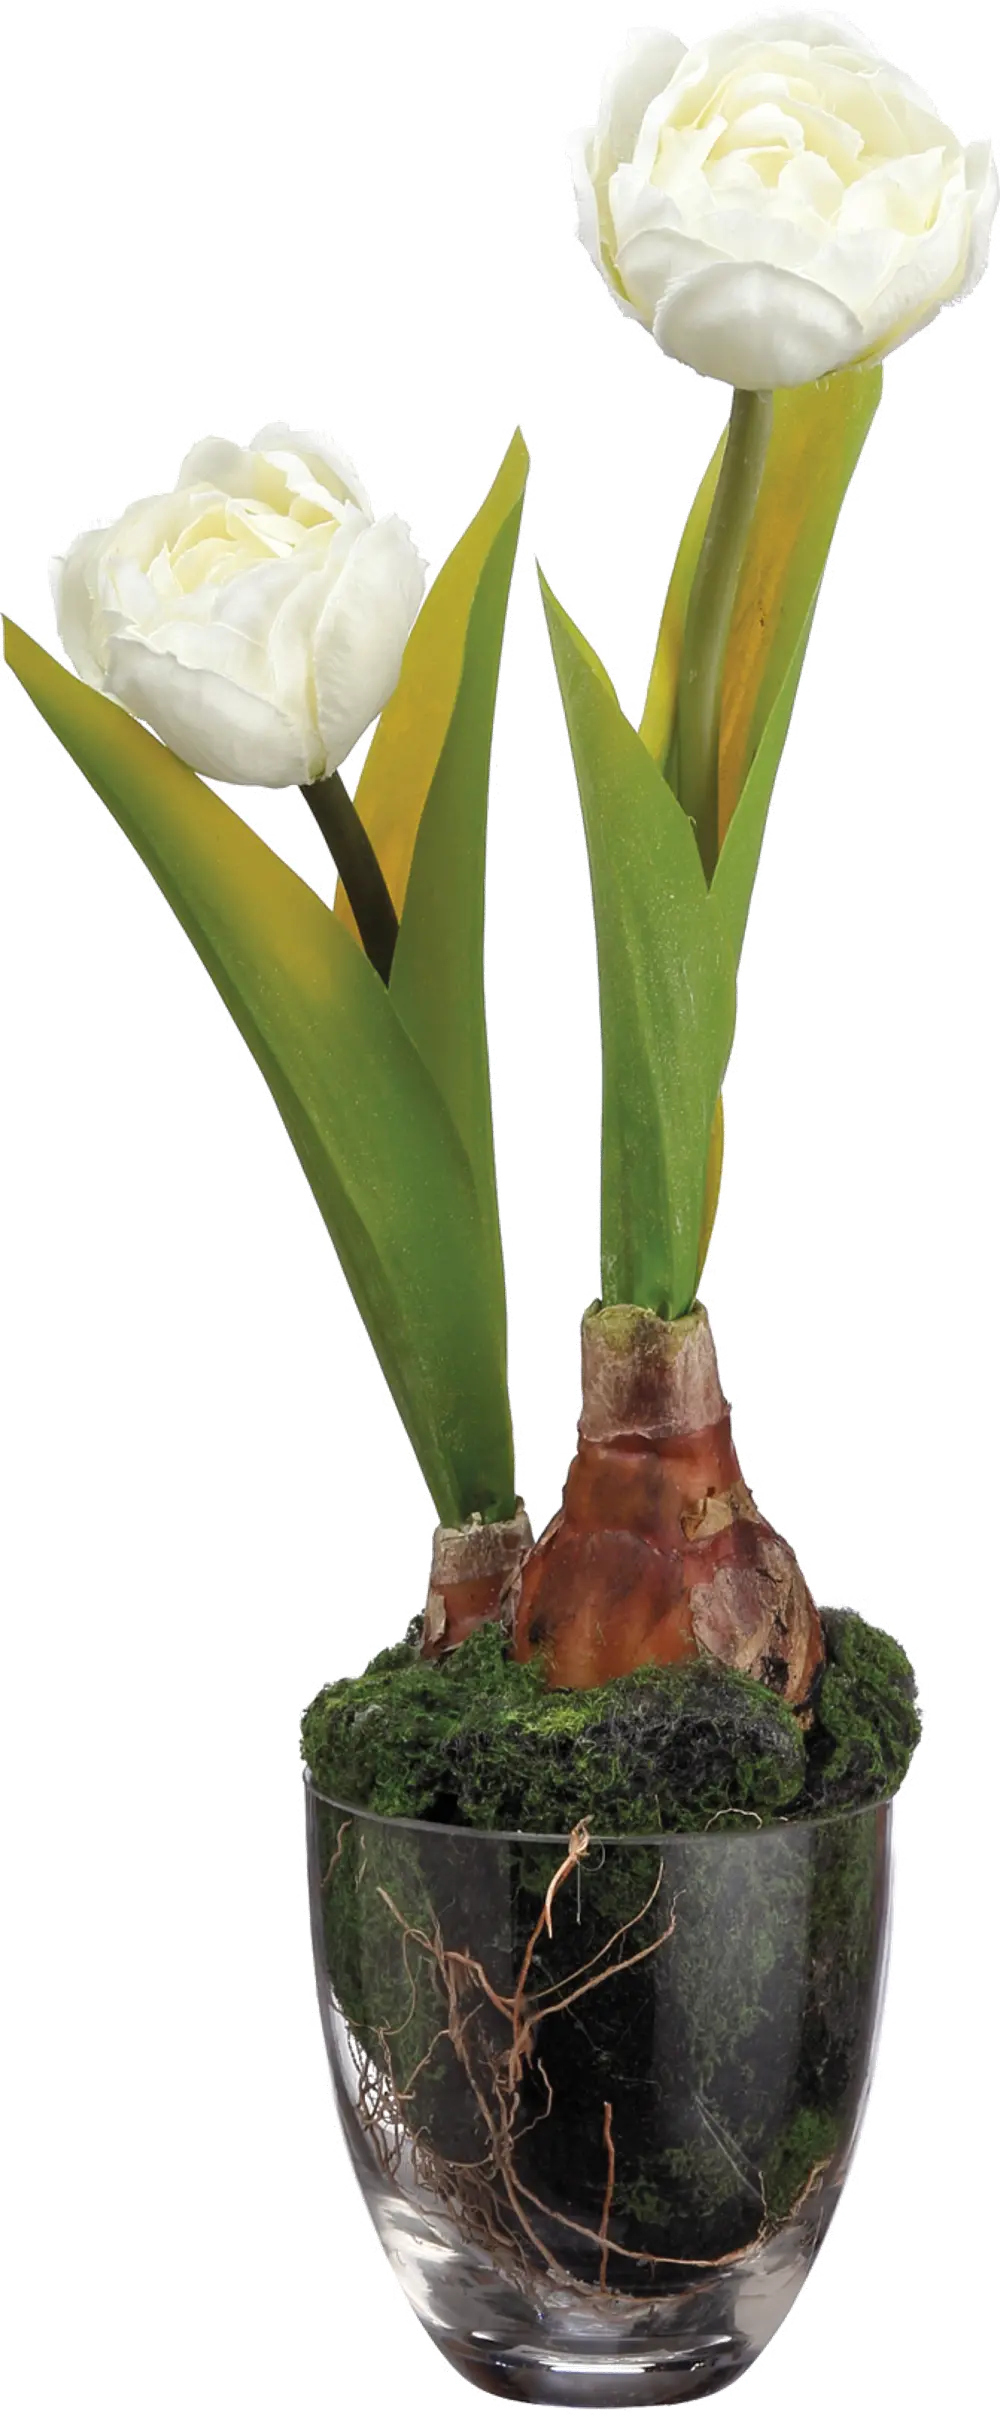 Tulips with Bulbs in Soil Arrangement-1